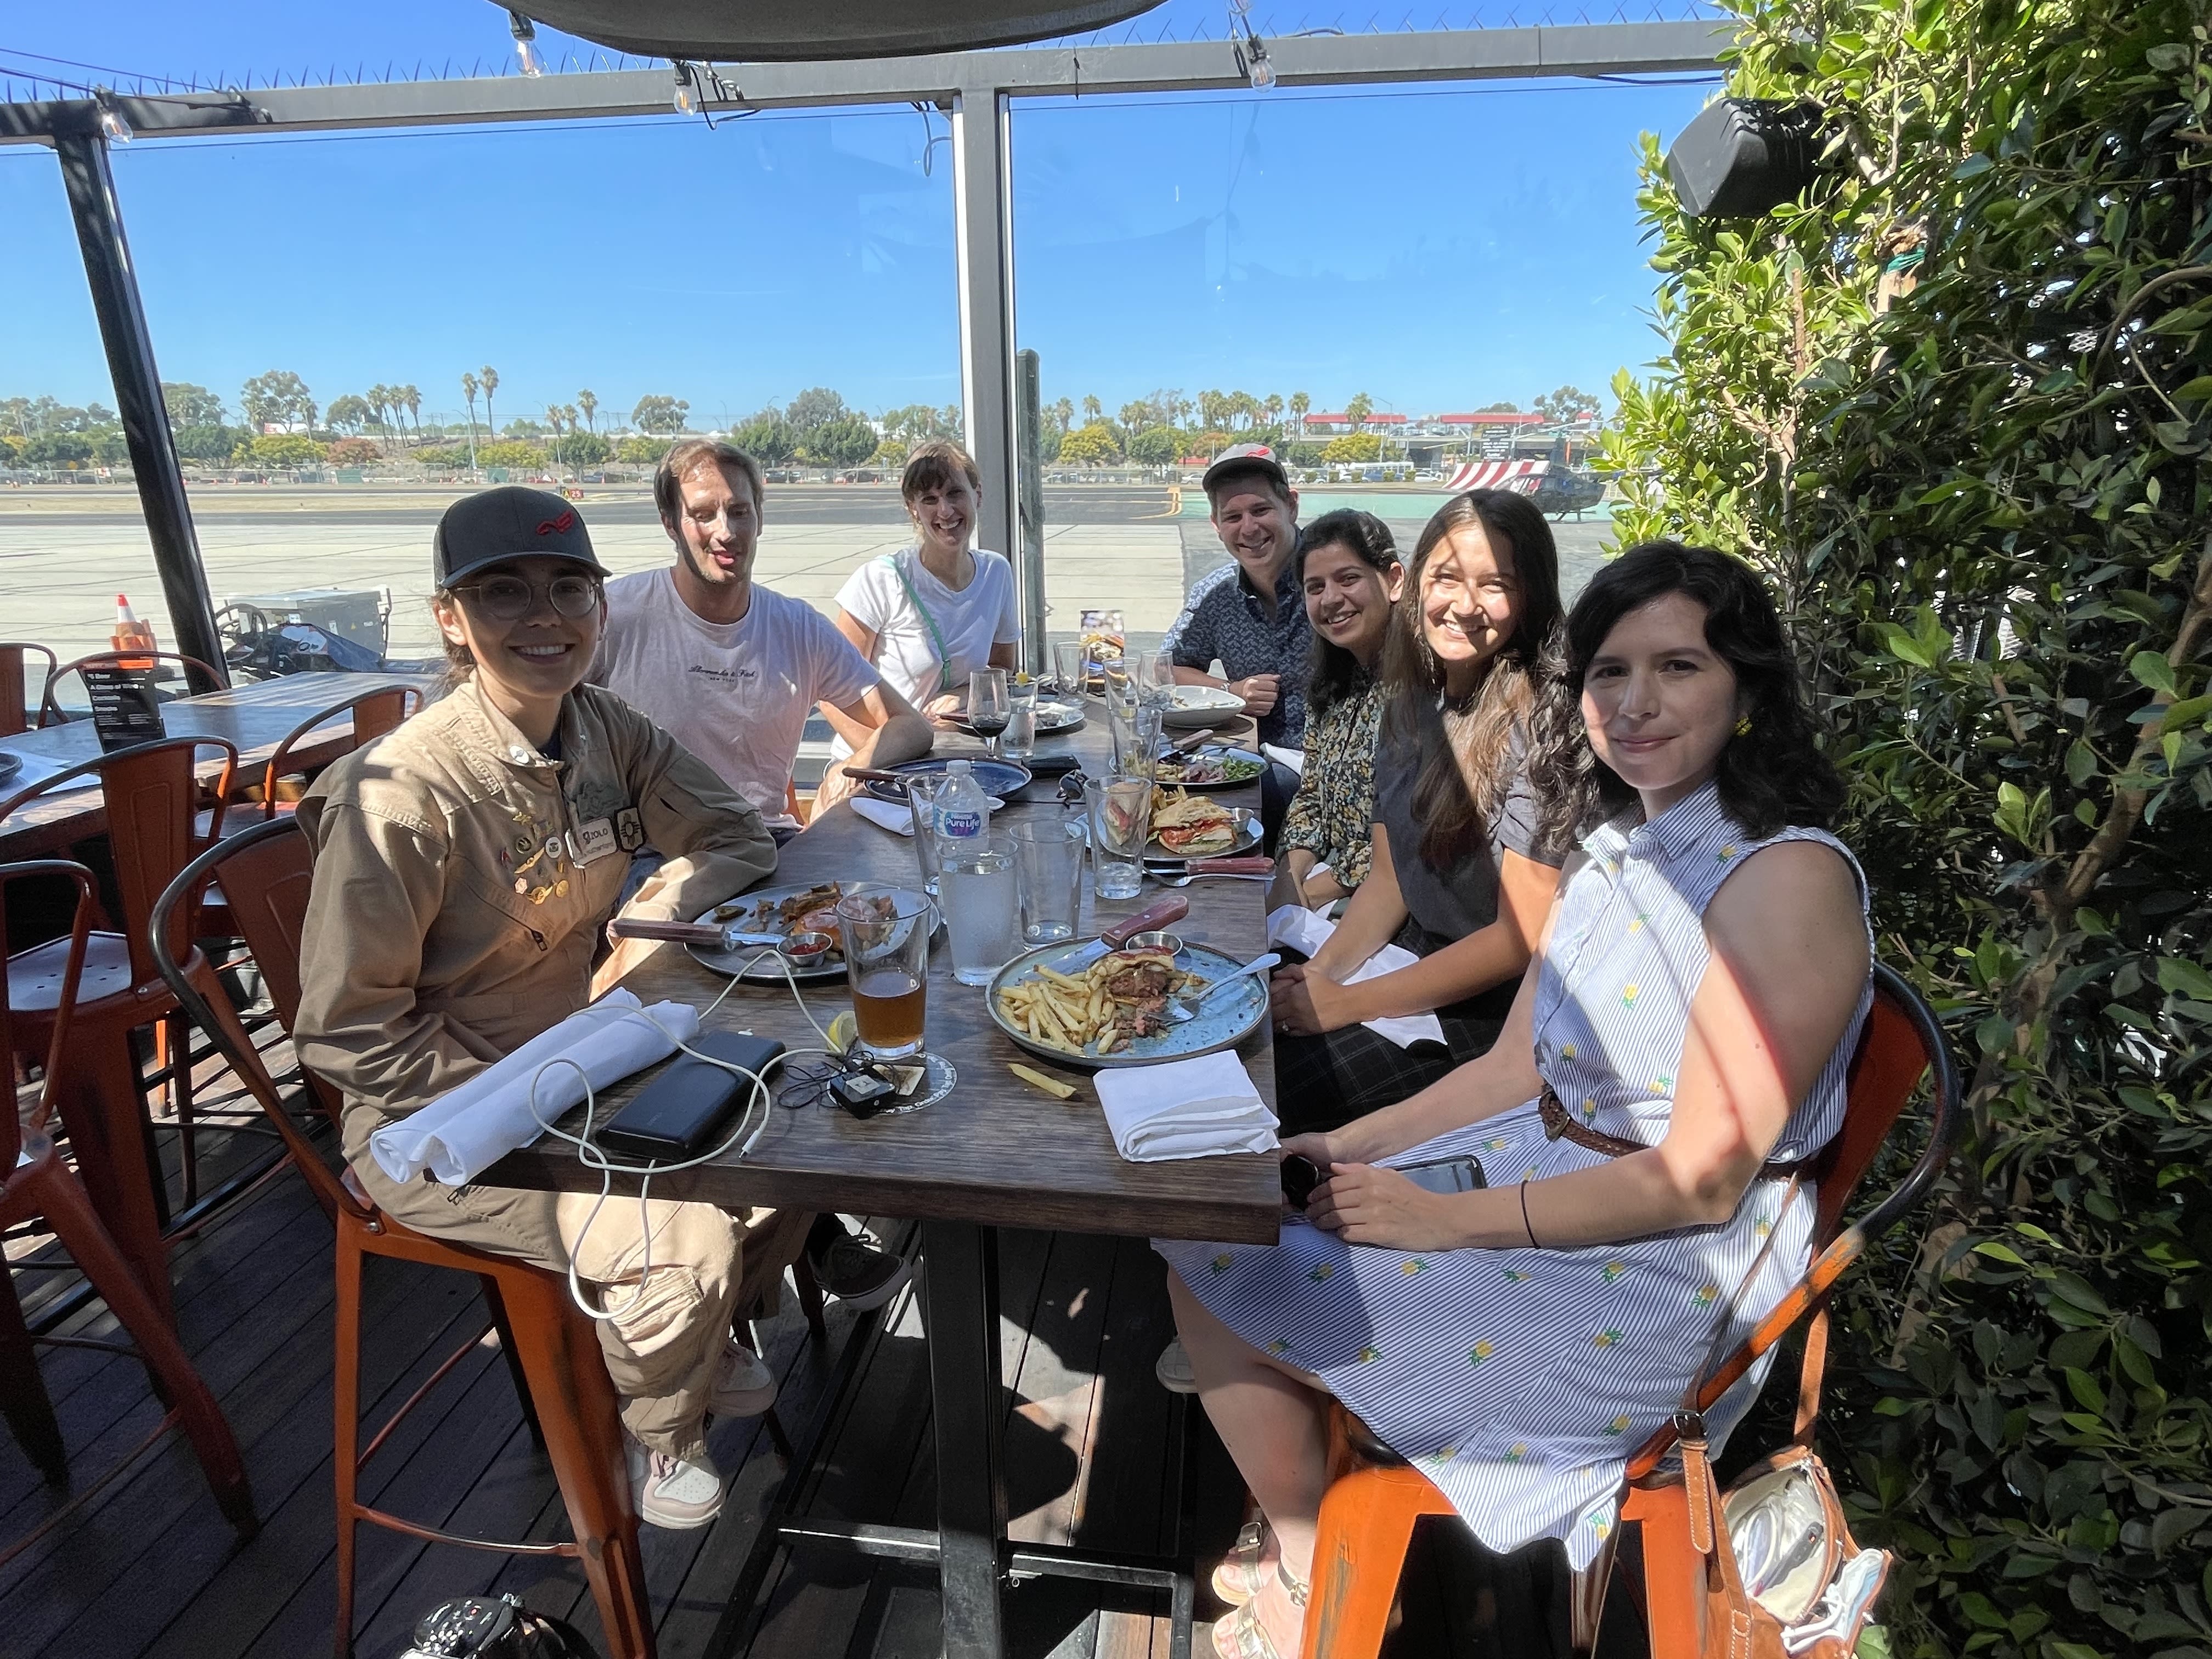 Zara Rutherford having lunch with the Virgin Hyperloop team